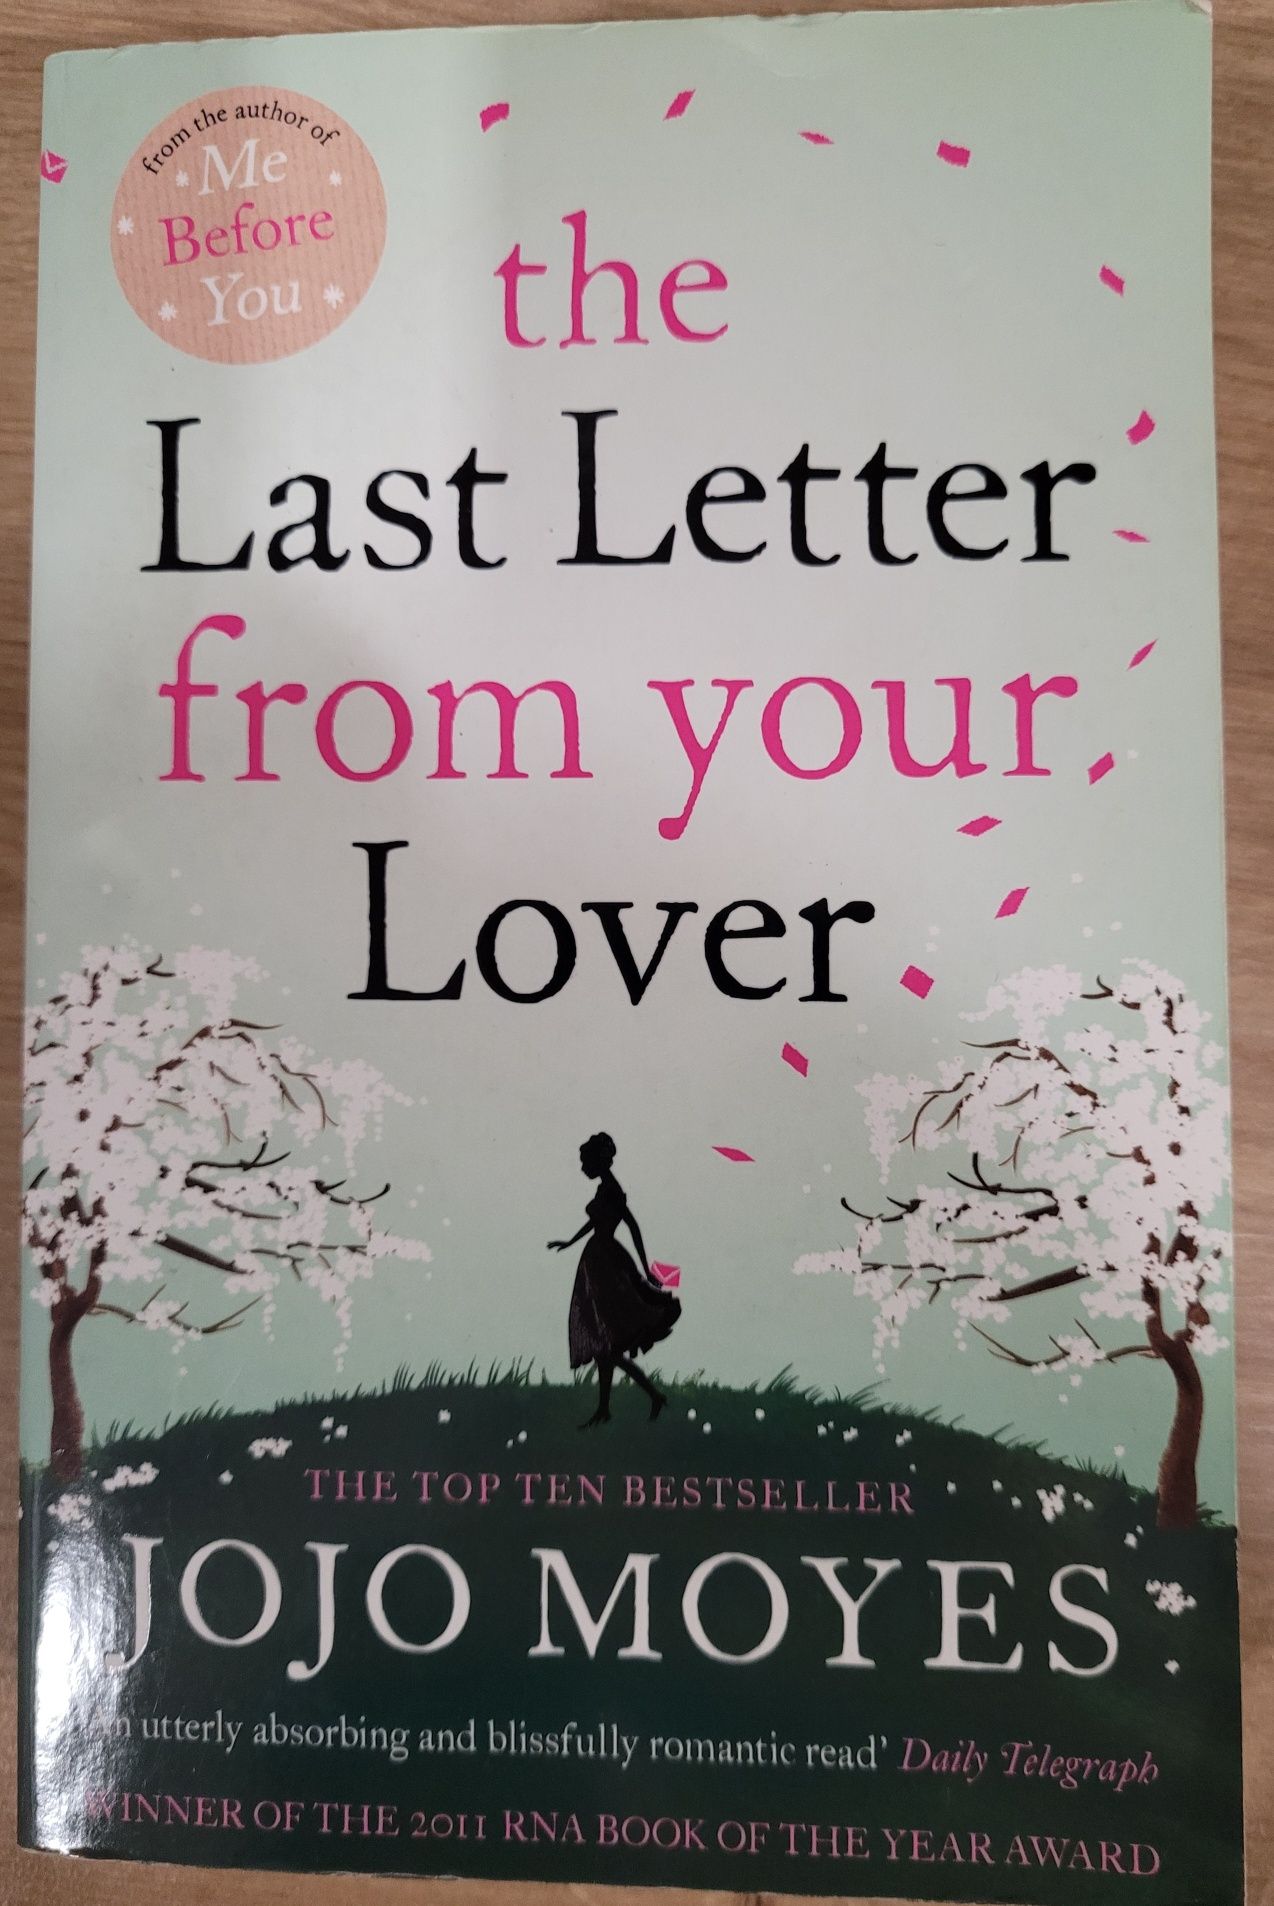 "The last letter from your lover" Jojo Moyes